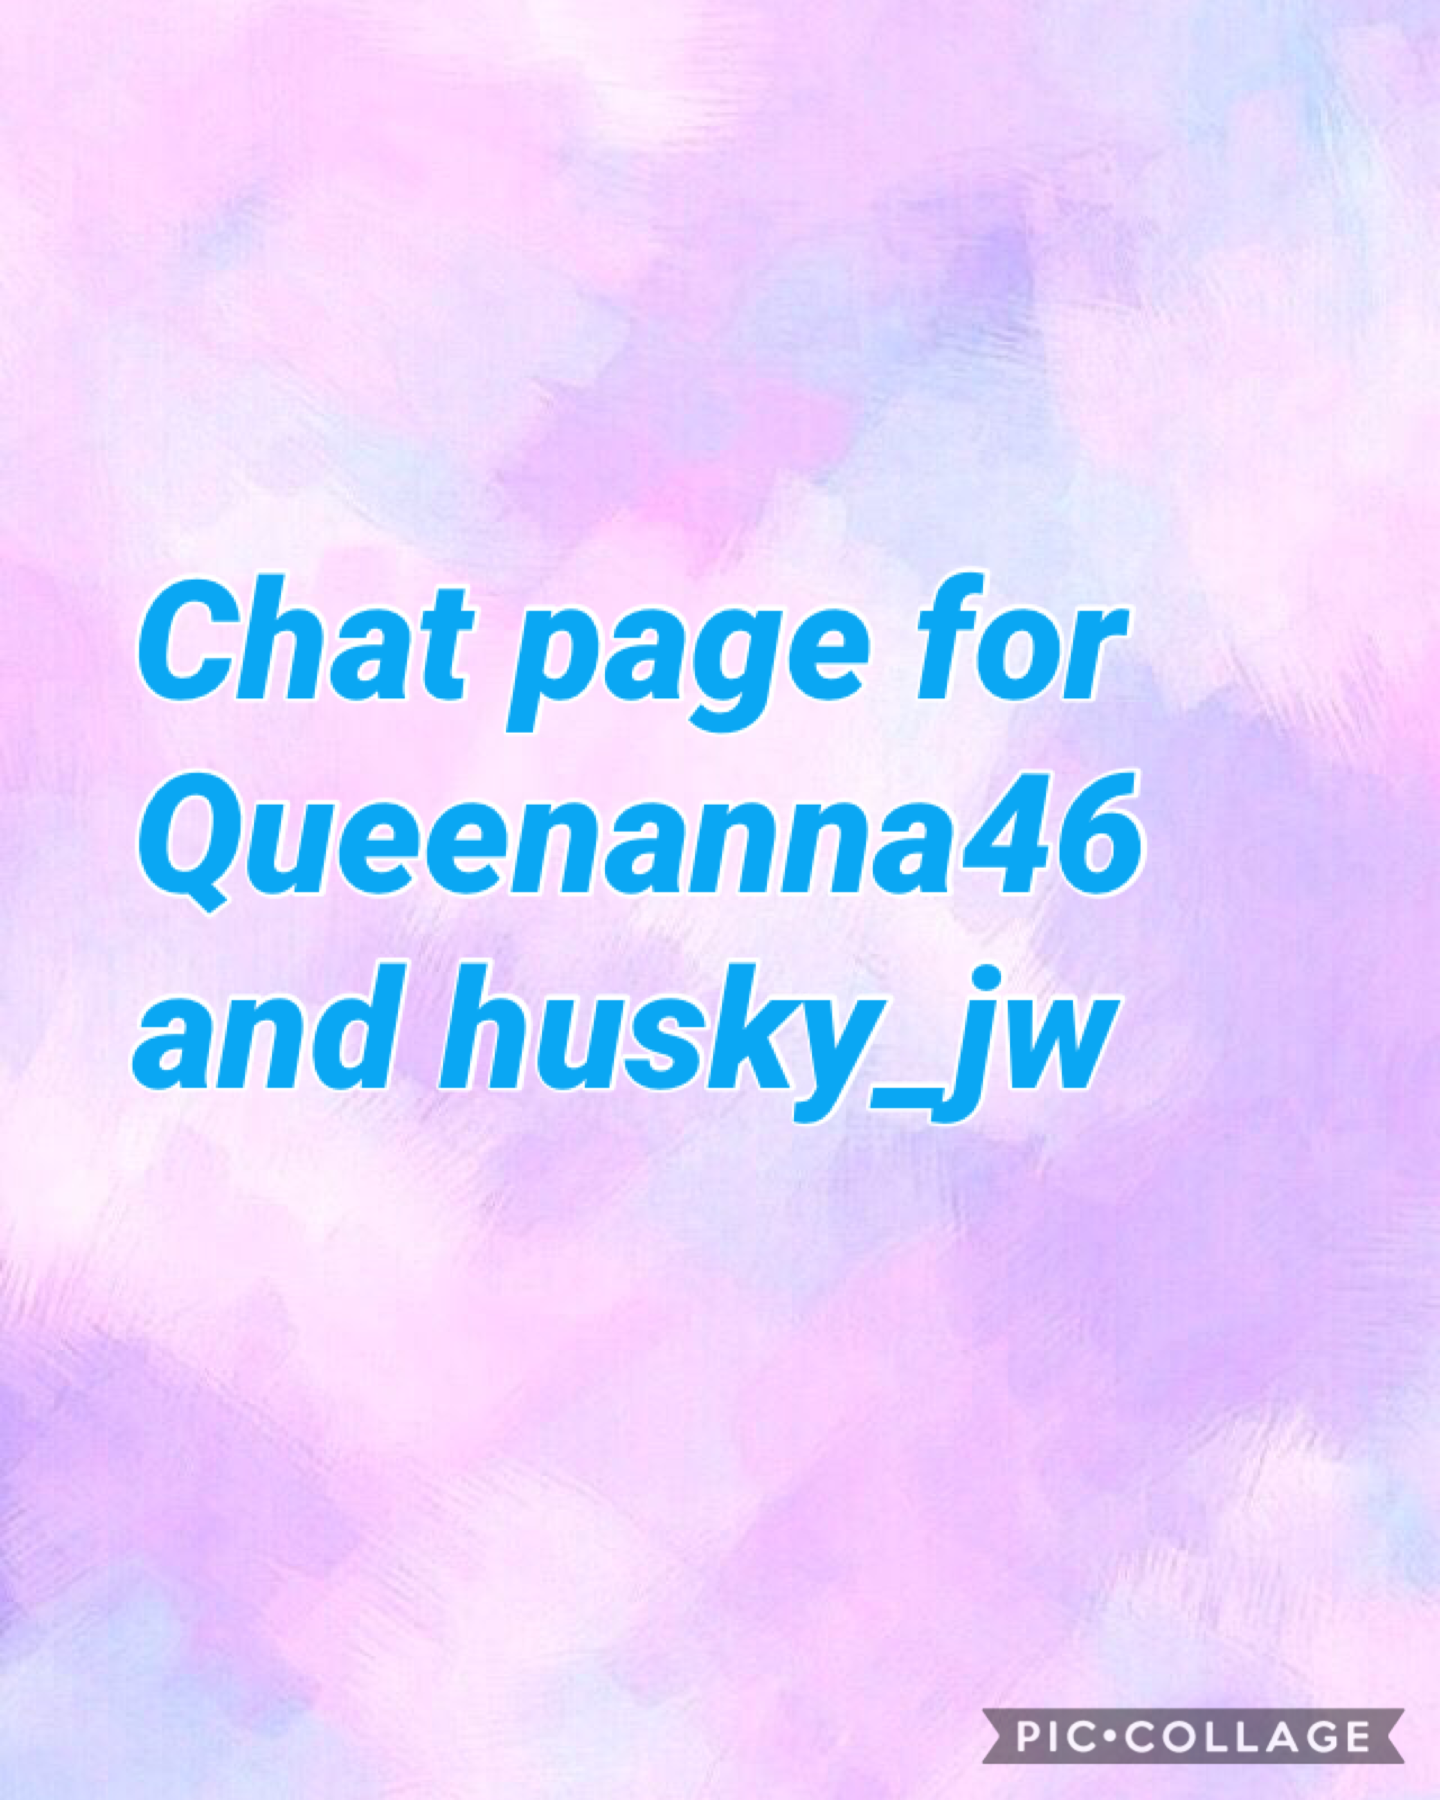 Chats page with husky_jw